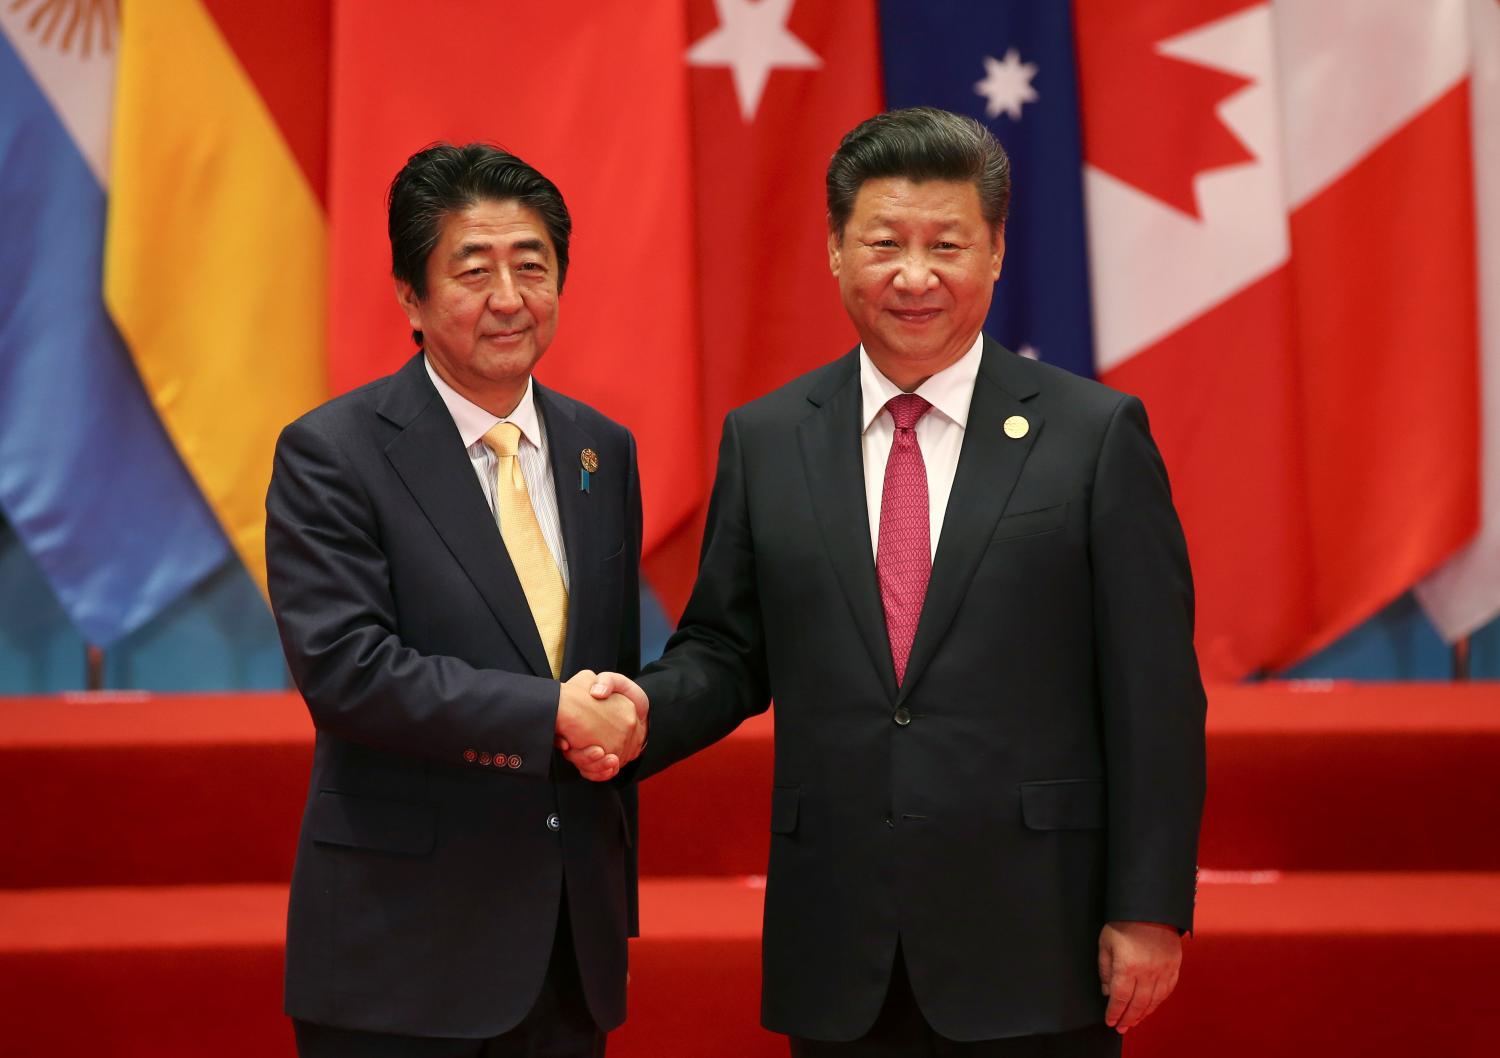 Chinese President Xi Jinping welcomes Japanese Prime Minister Shinzo Abe to the G20 Summit in Hangzhou, Zhejiang province, China September 4, 2016. REUTERS/Damir Sagolj - S1AETZIEOYAA